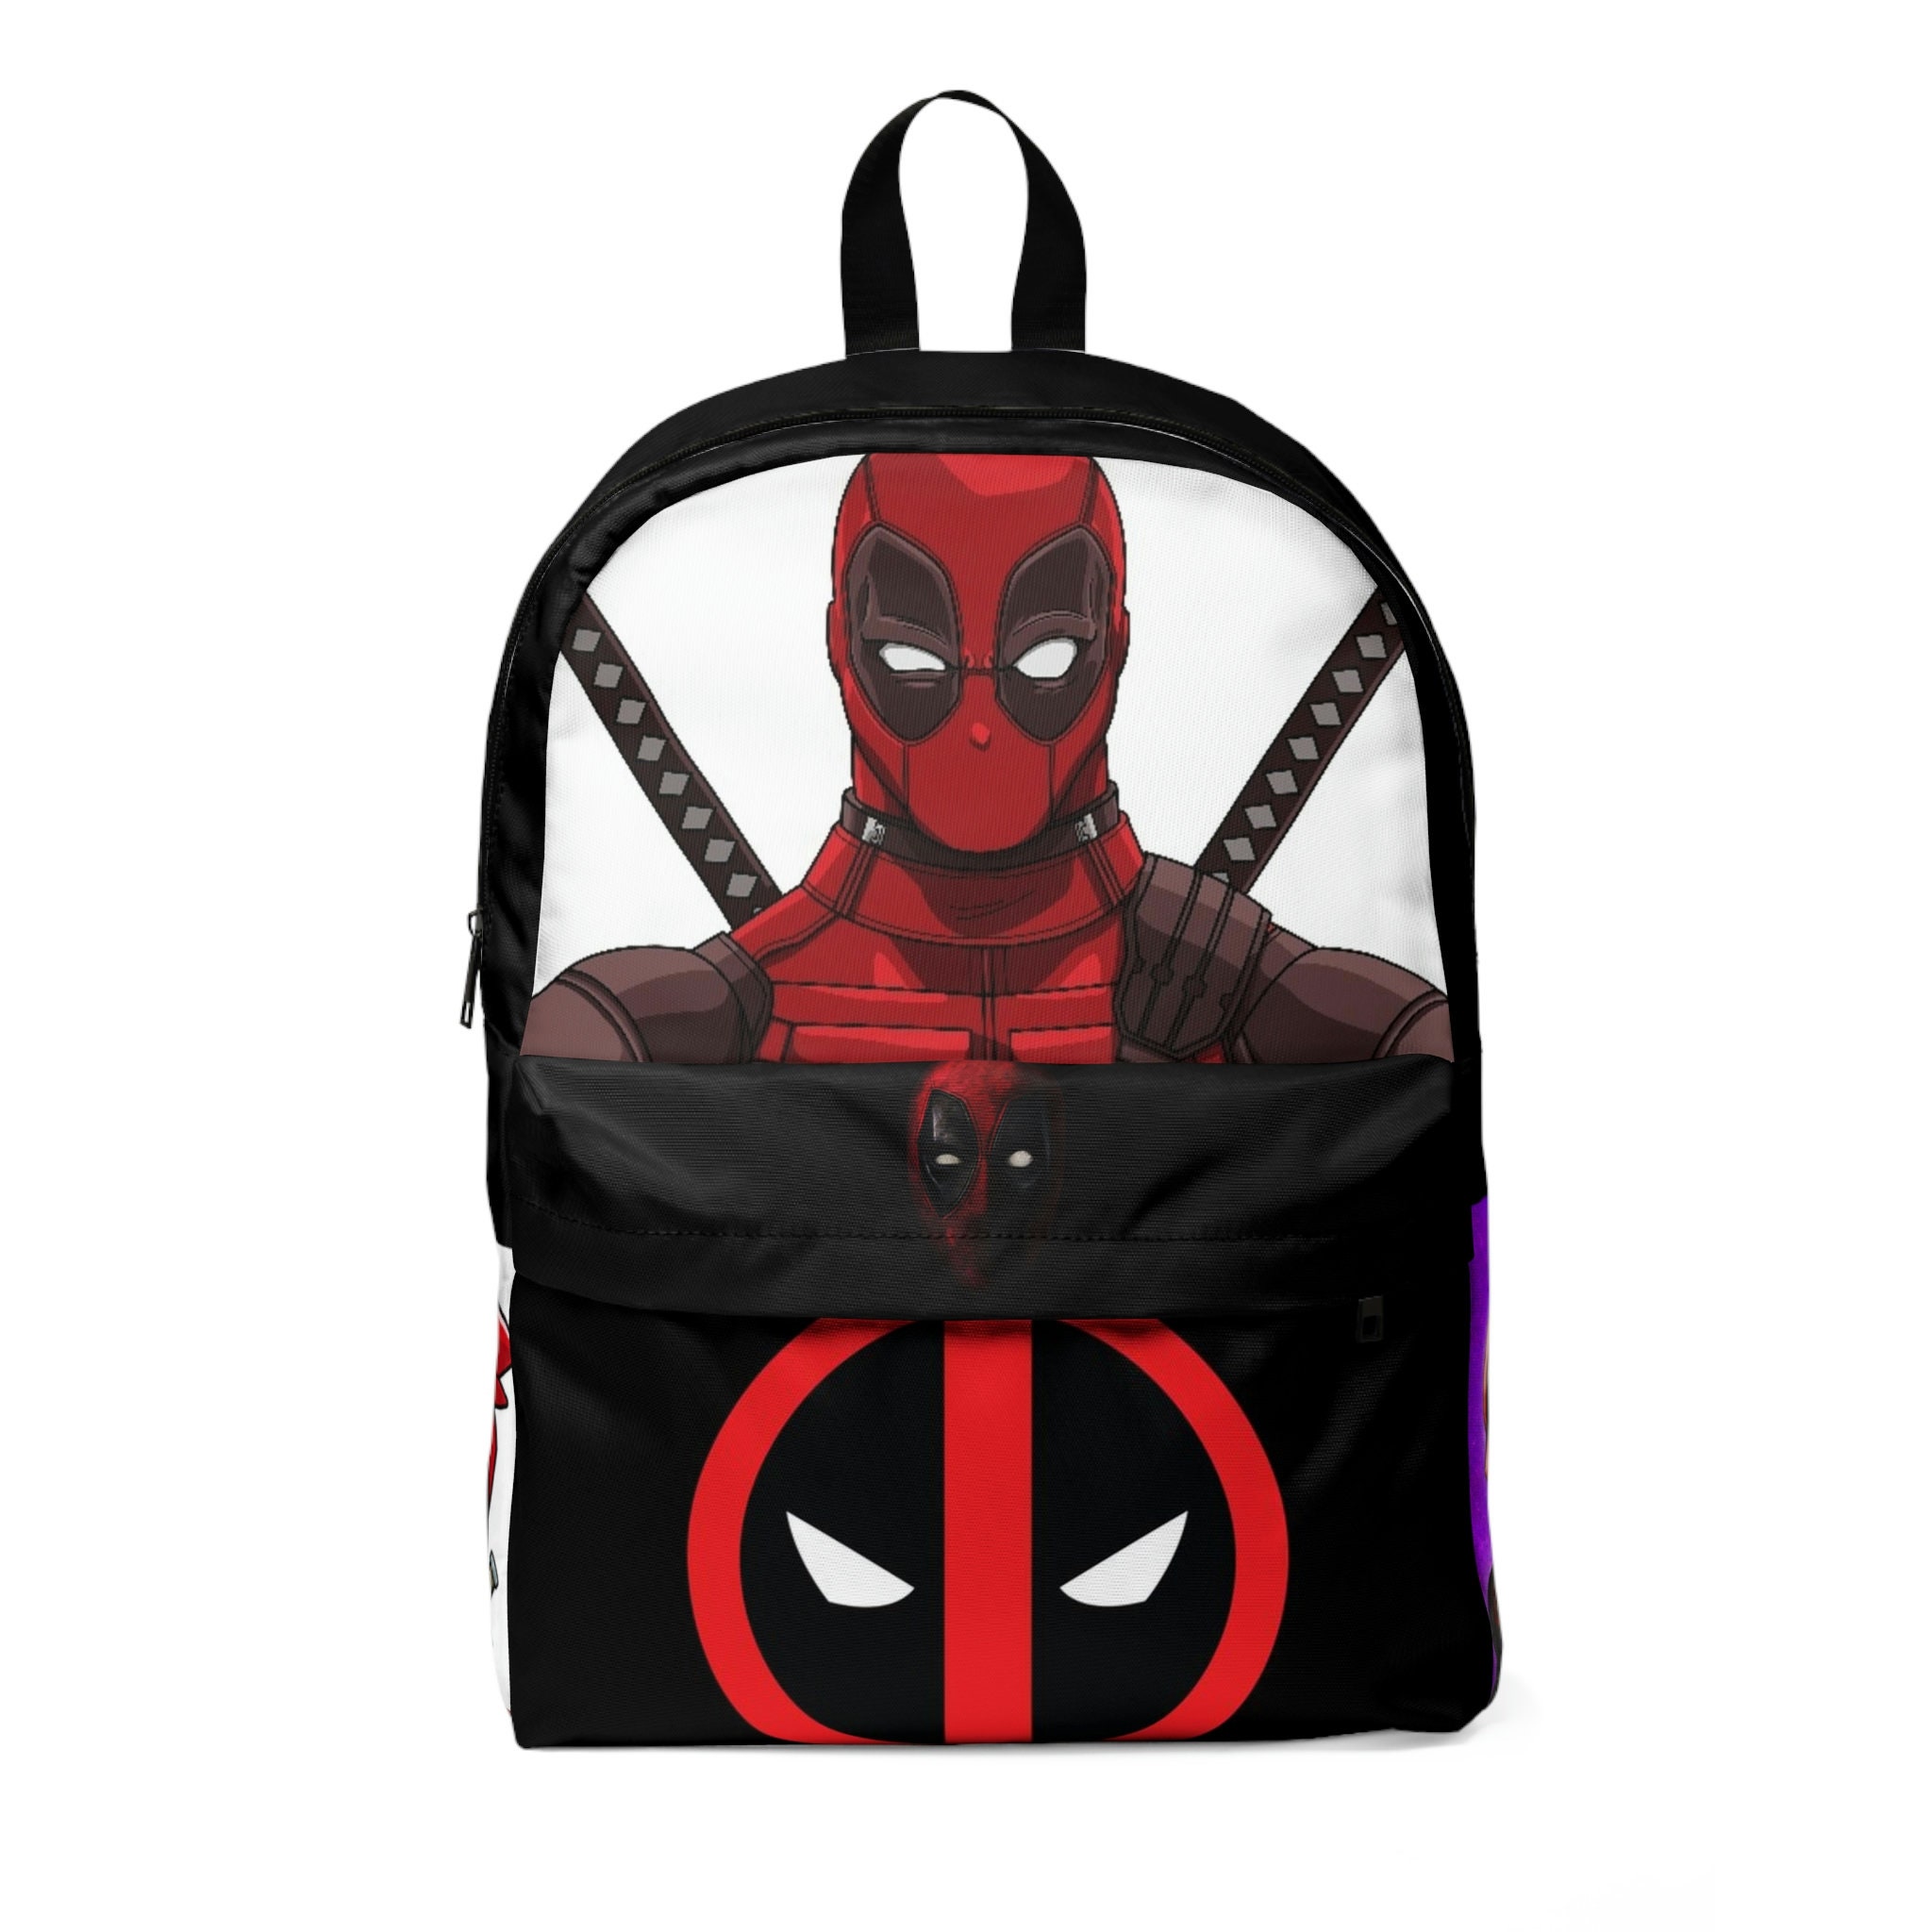 School Bag School Bag for Kids Backpack for Boys Girls School Bag  Travelling Picnic Gift Purpose